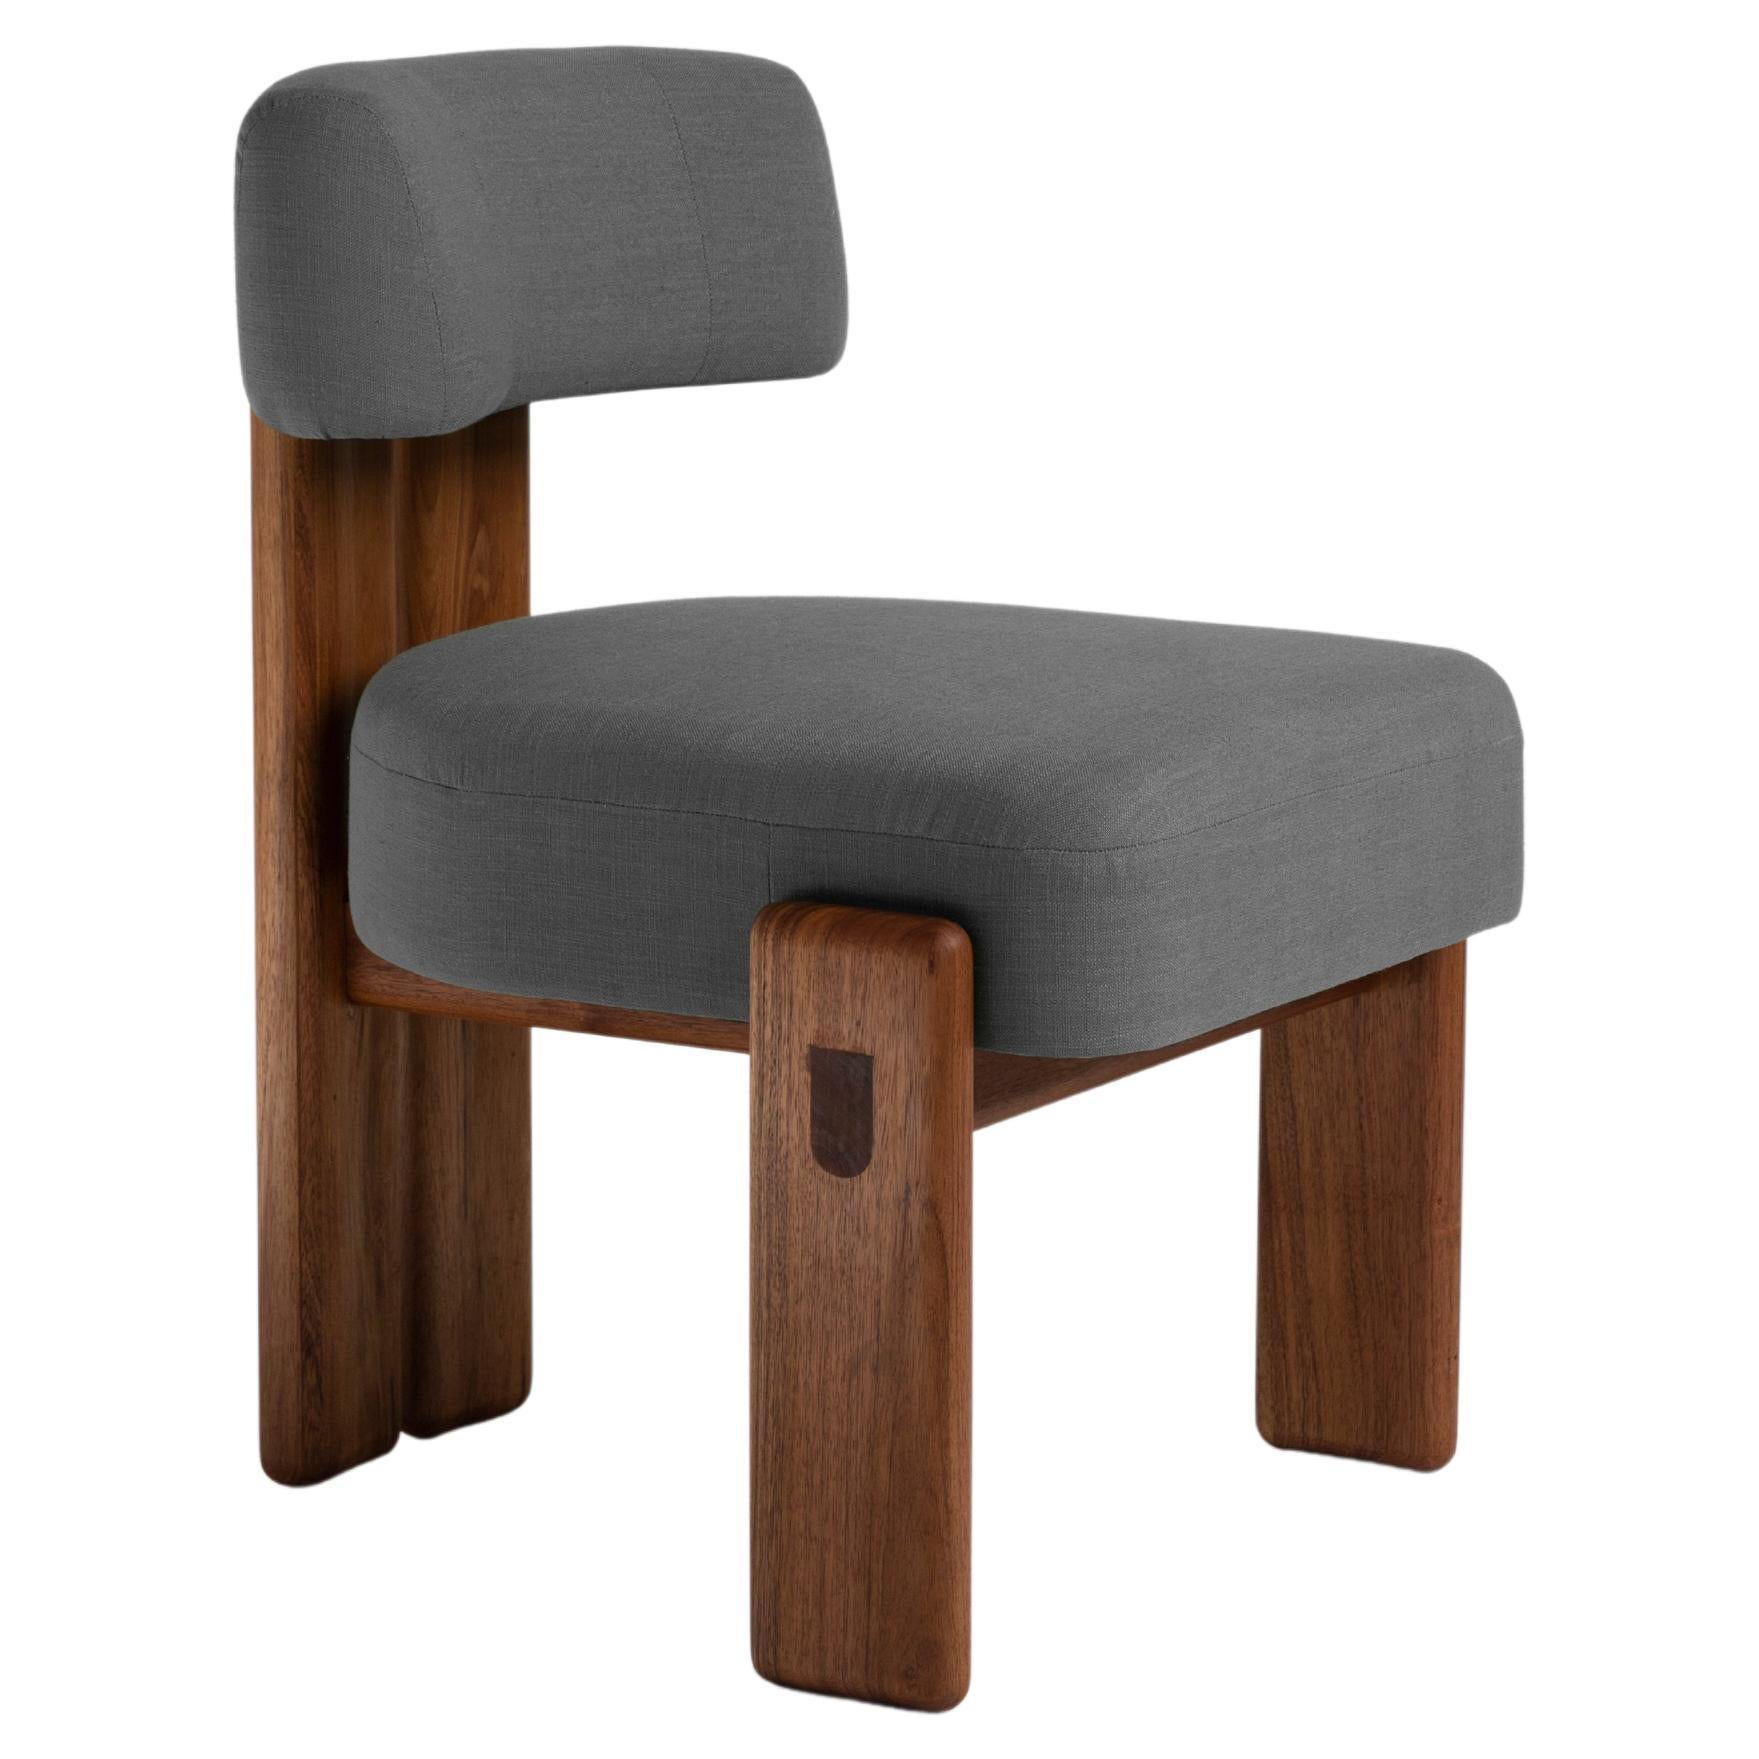 De la Paz Dining Chair Solid Wood, Contemporary Mexican Design